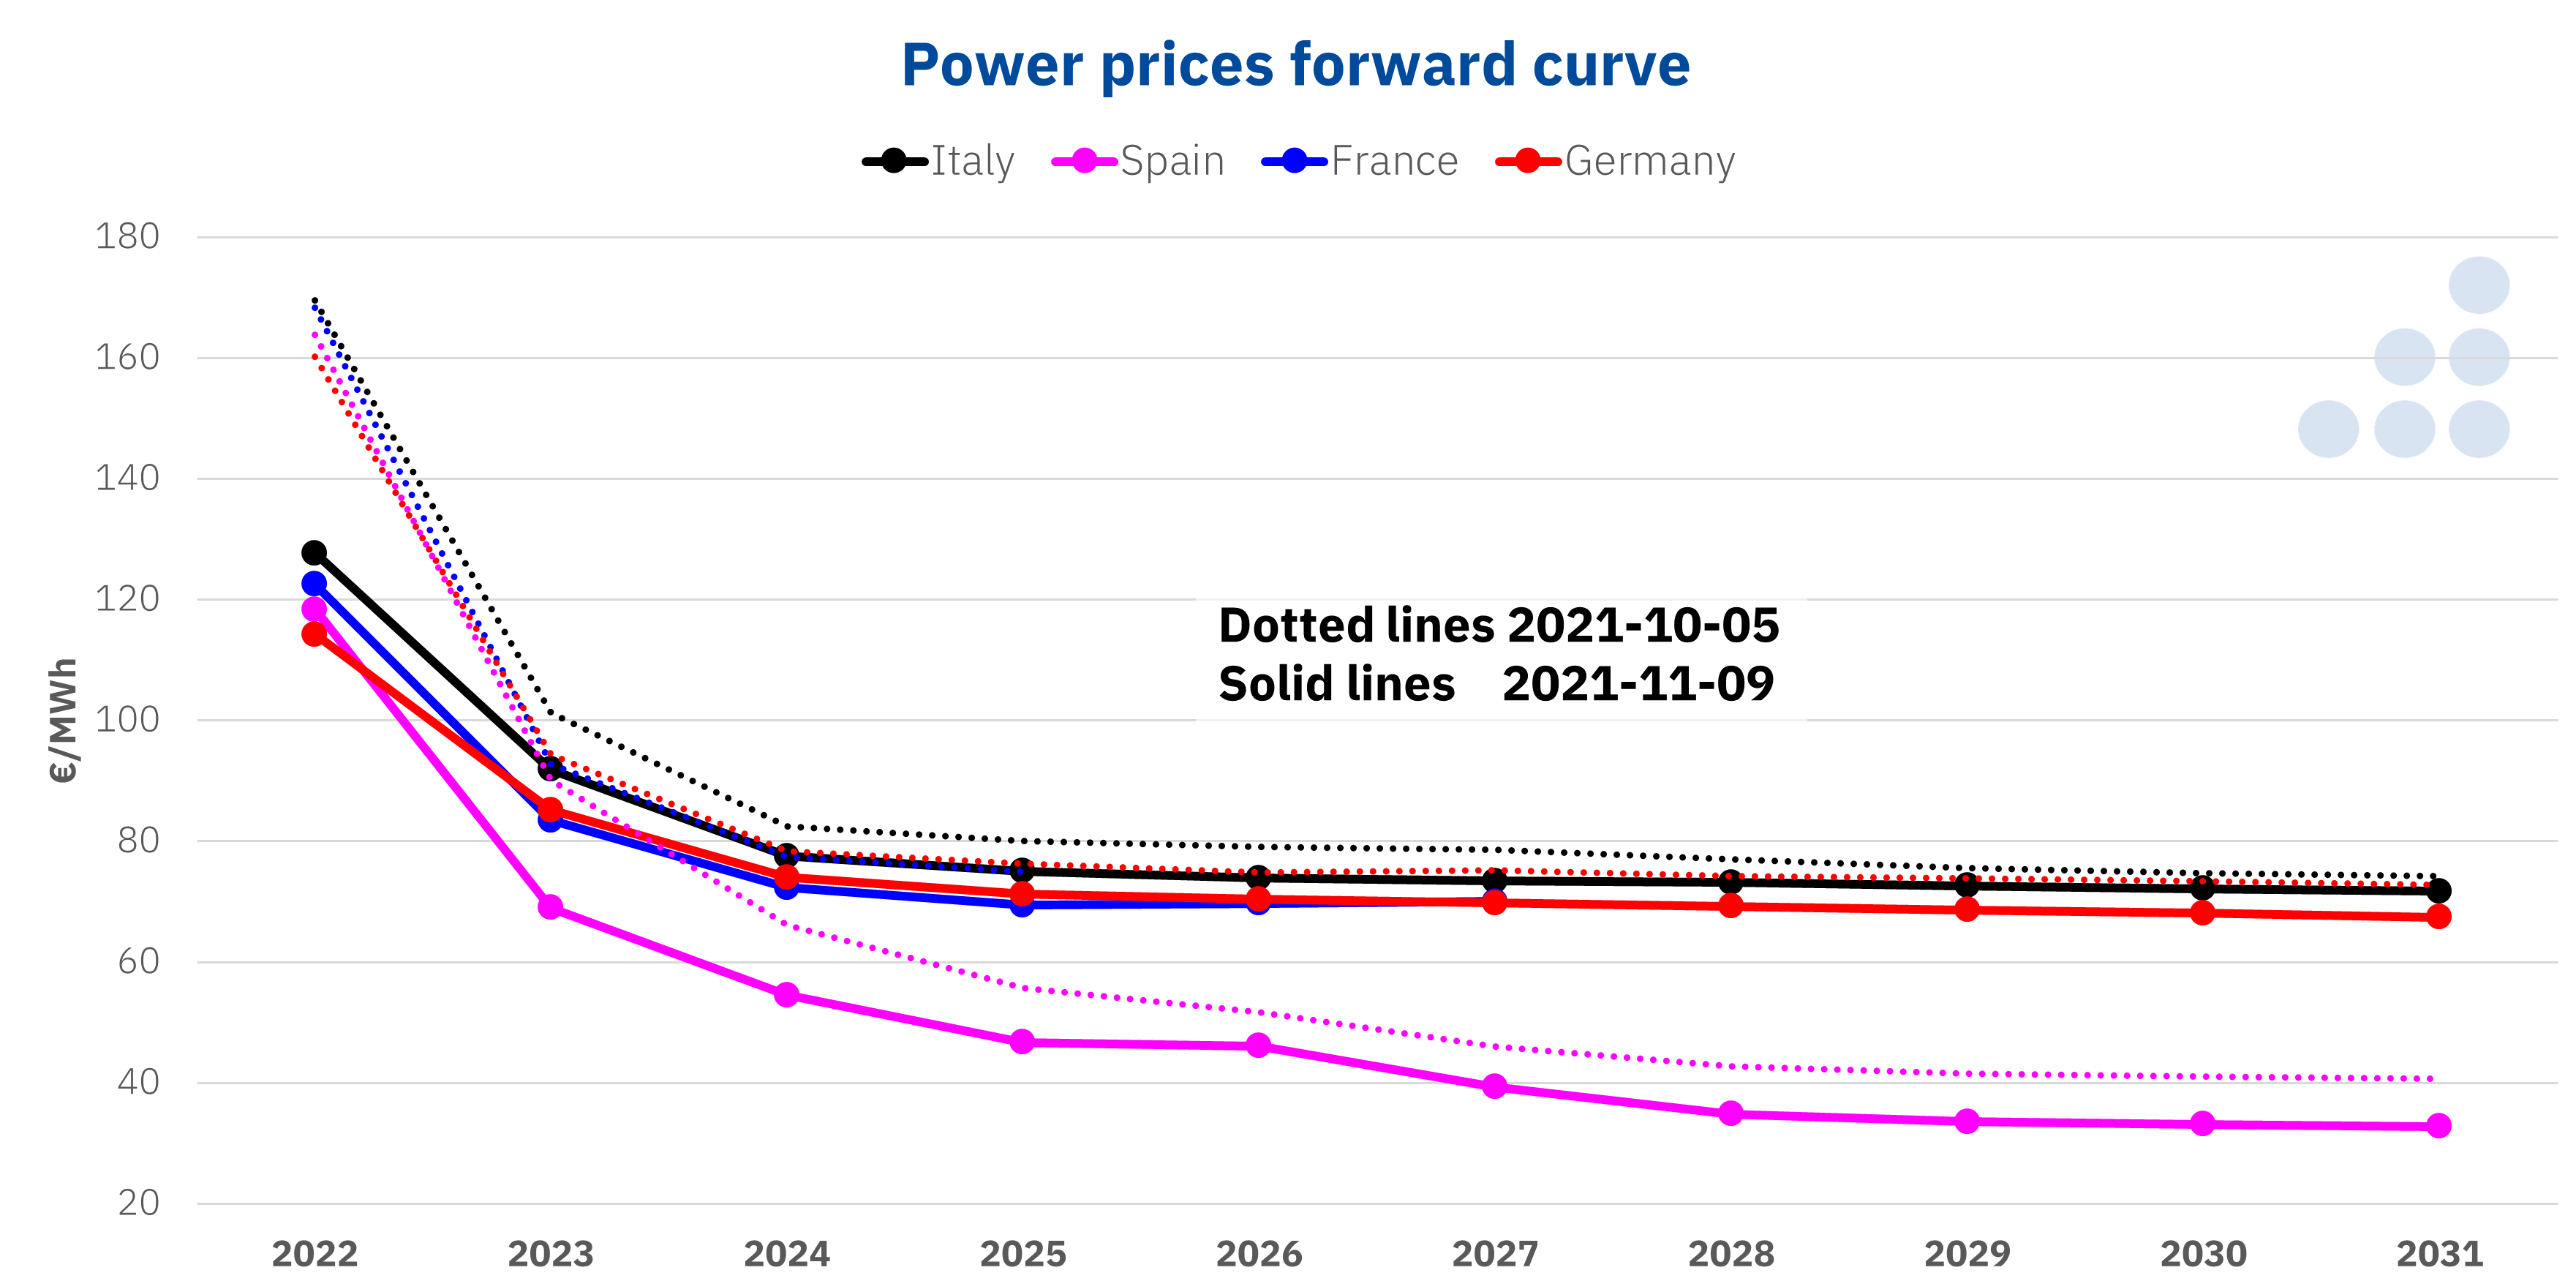 AleaSoft - Power prices forward curve